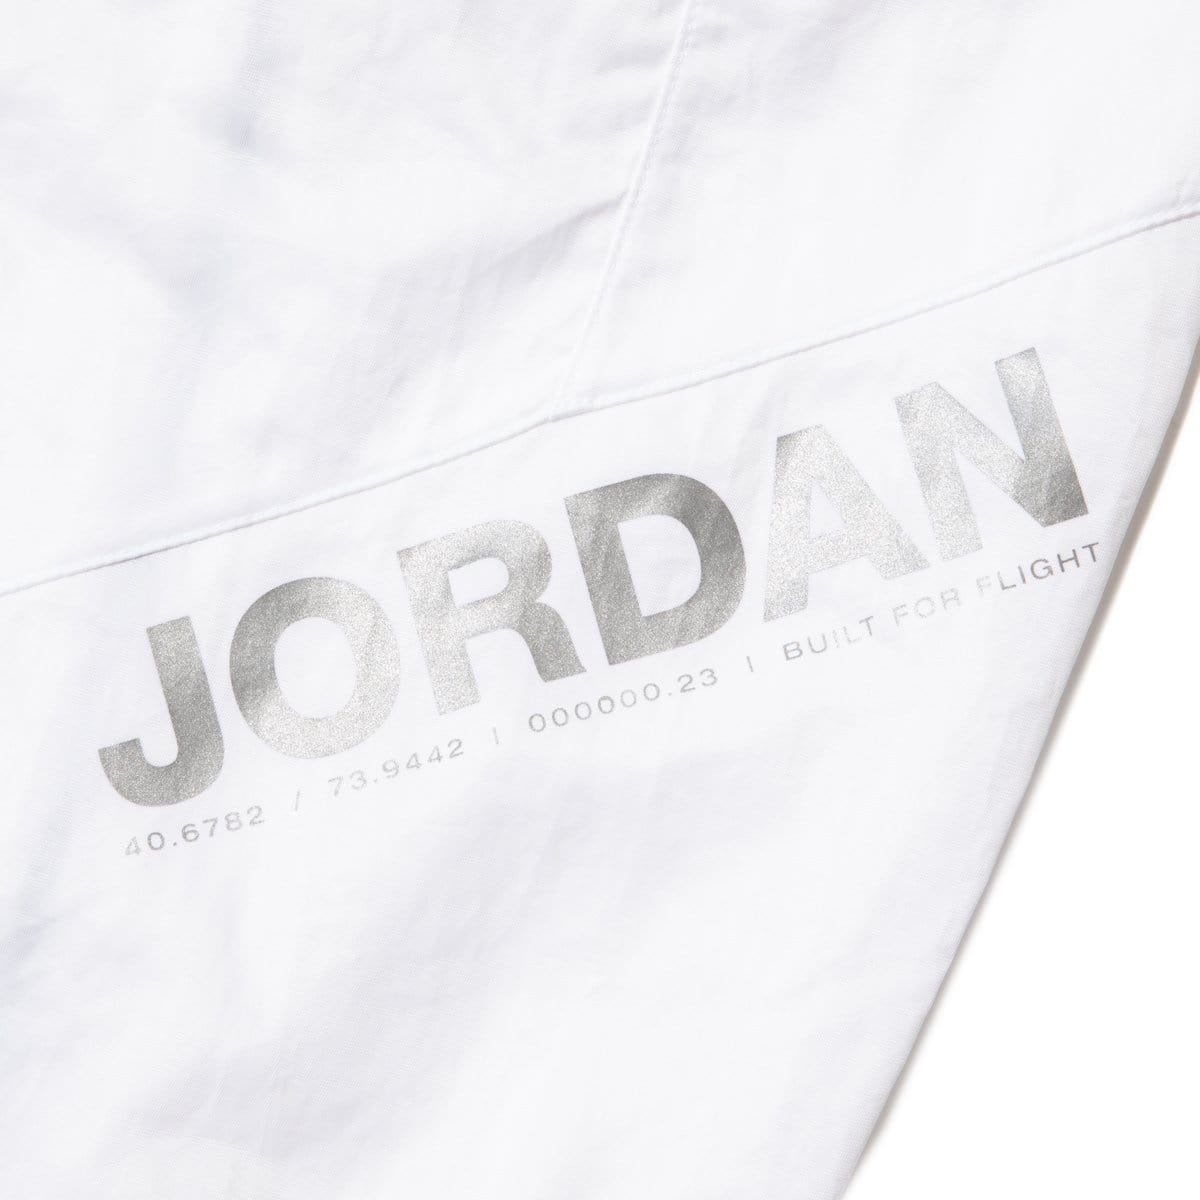 Air Jordan Shirts WOMEN'S JORDAN FLIGHTSUIT